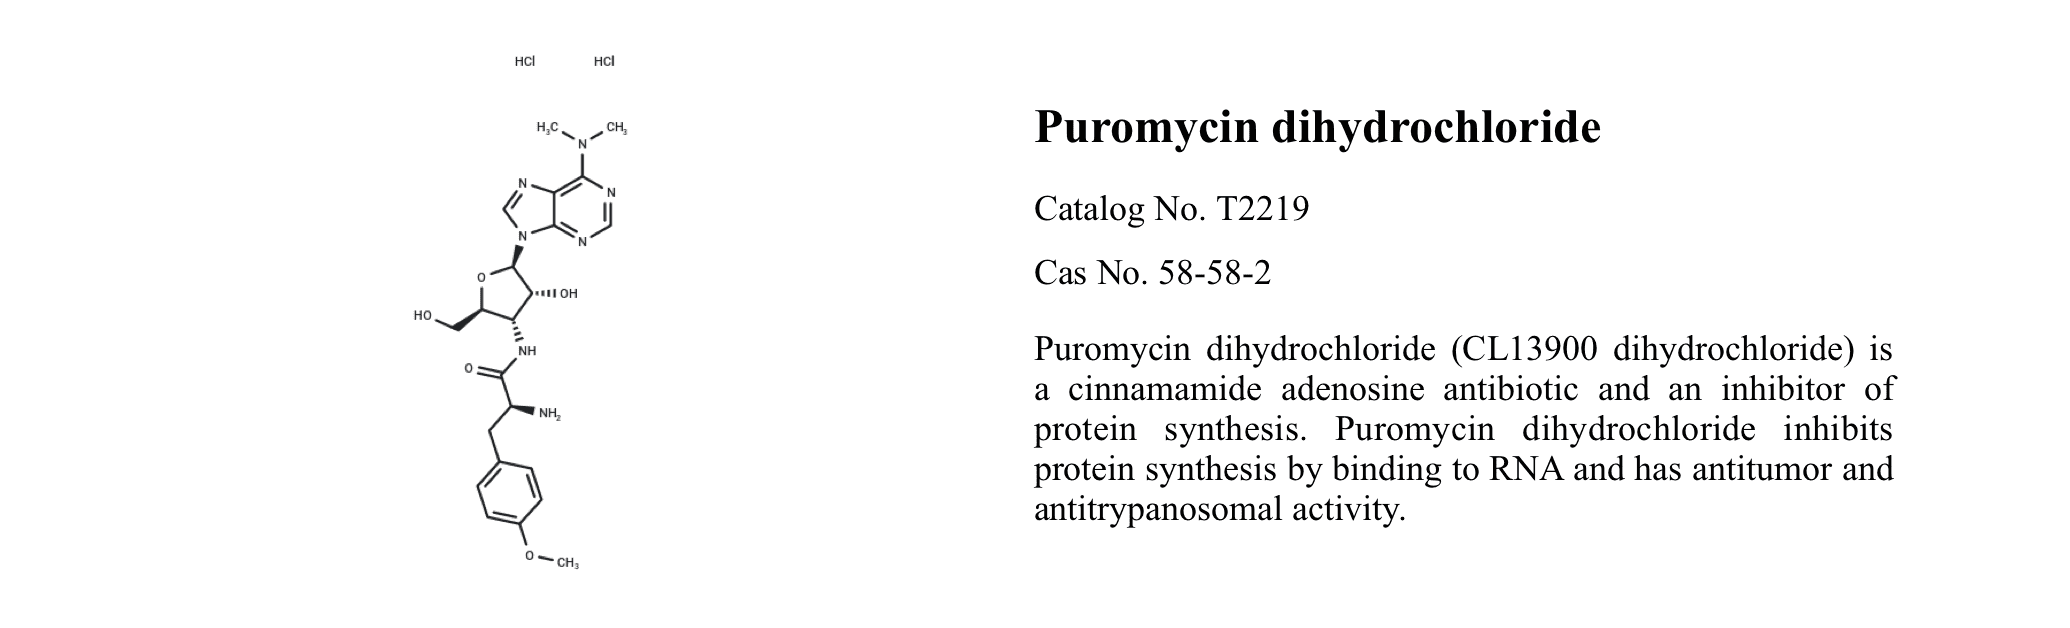 WIKIMOLE—Puromycin dihydrochloride